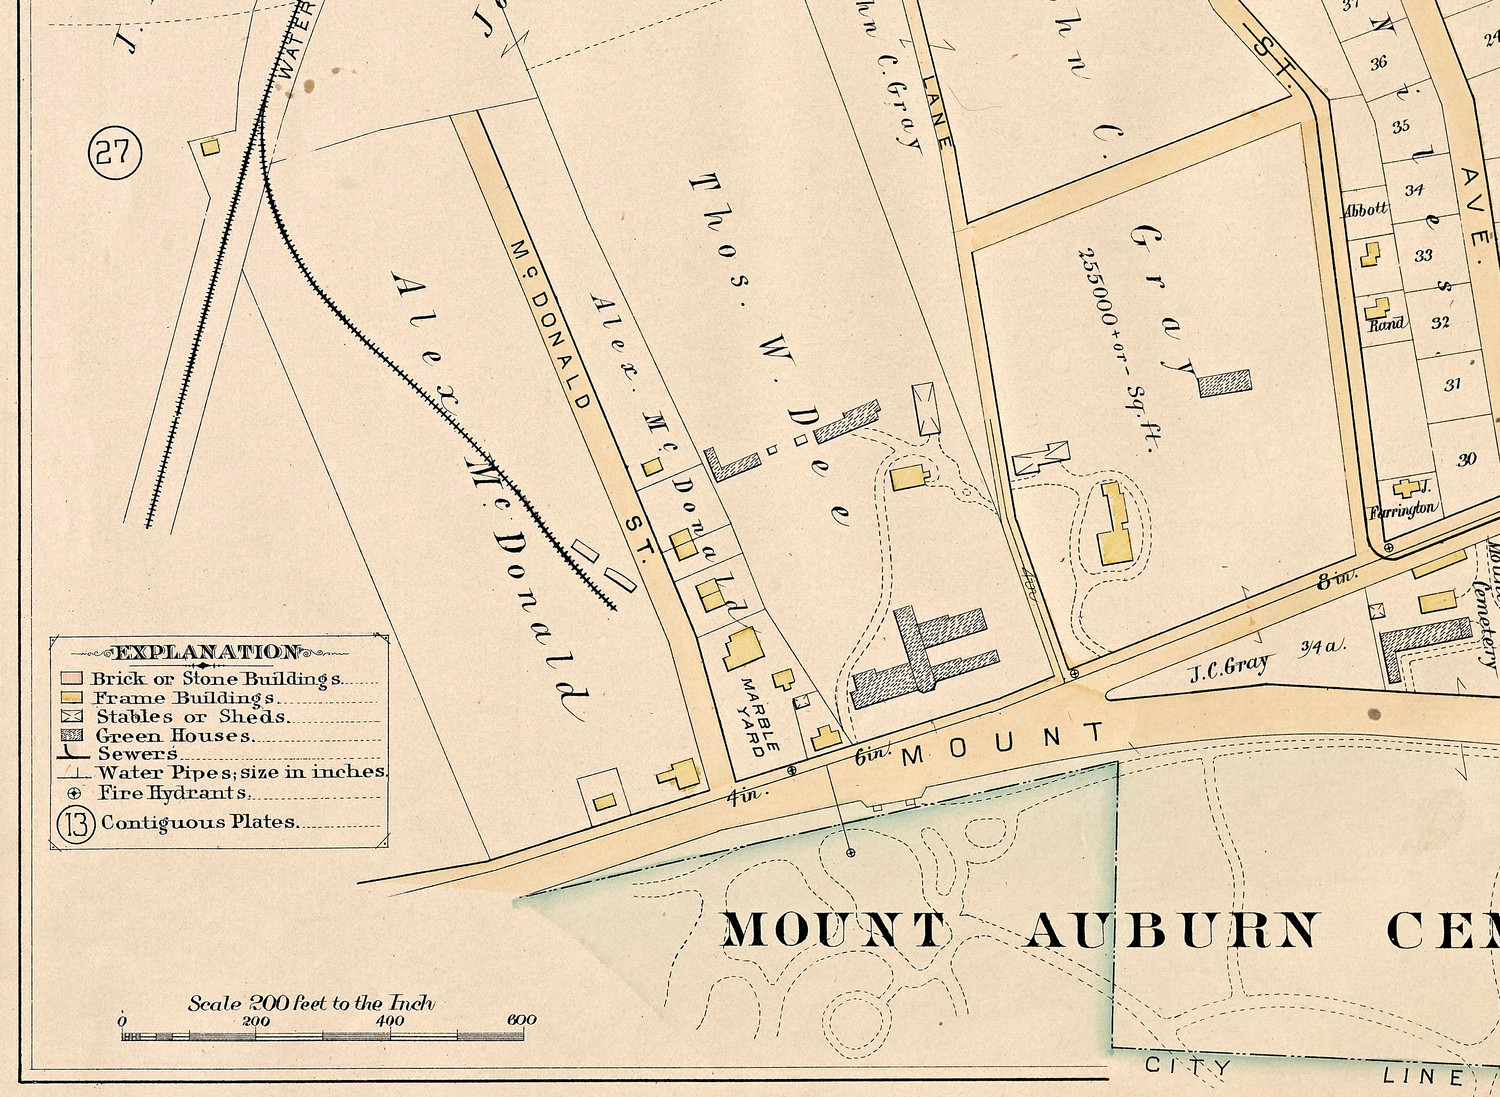 1886 Cambridge atlas showing McDonald Street.